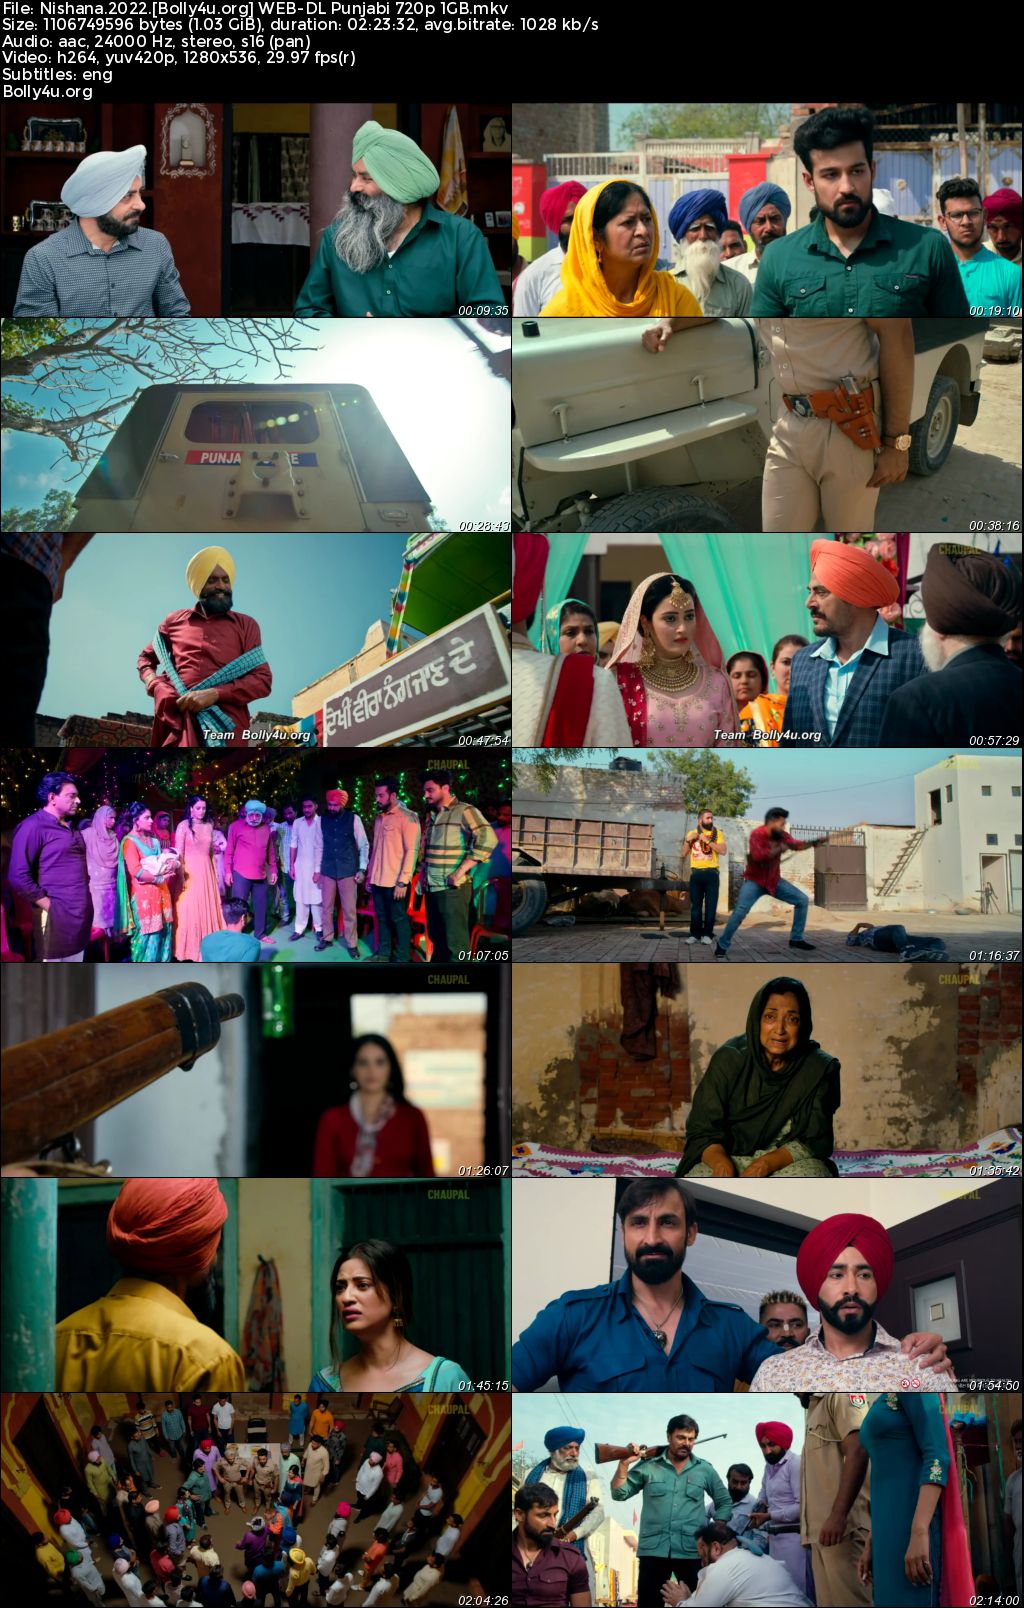 Nishana 2022 WEB-DL Punjabi Full Movie Download 1080p 720p 480p